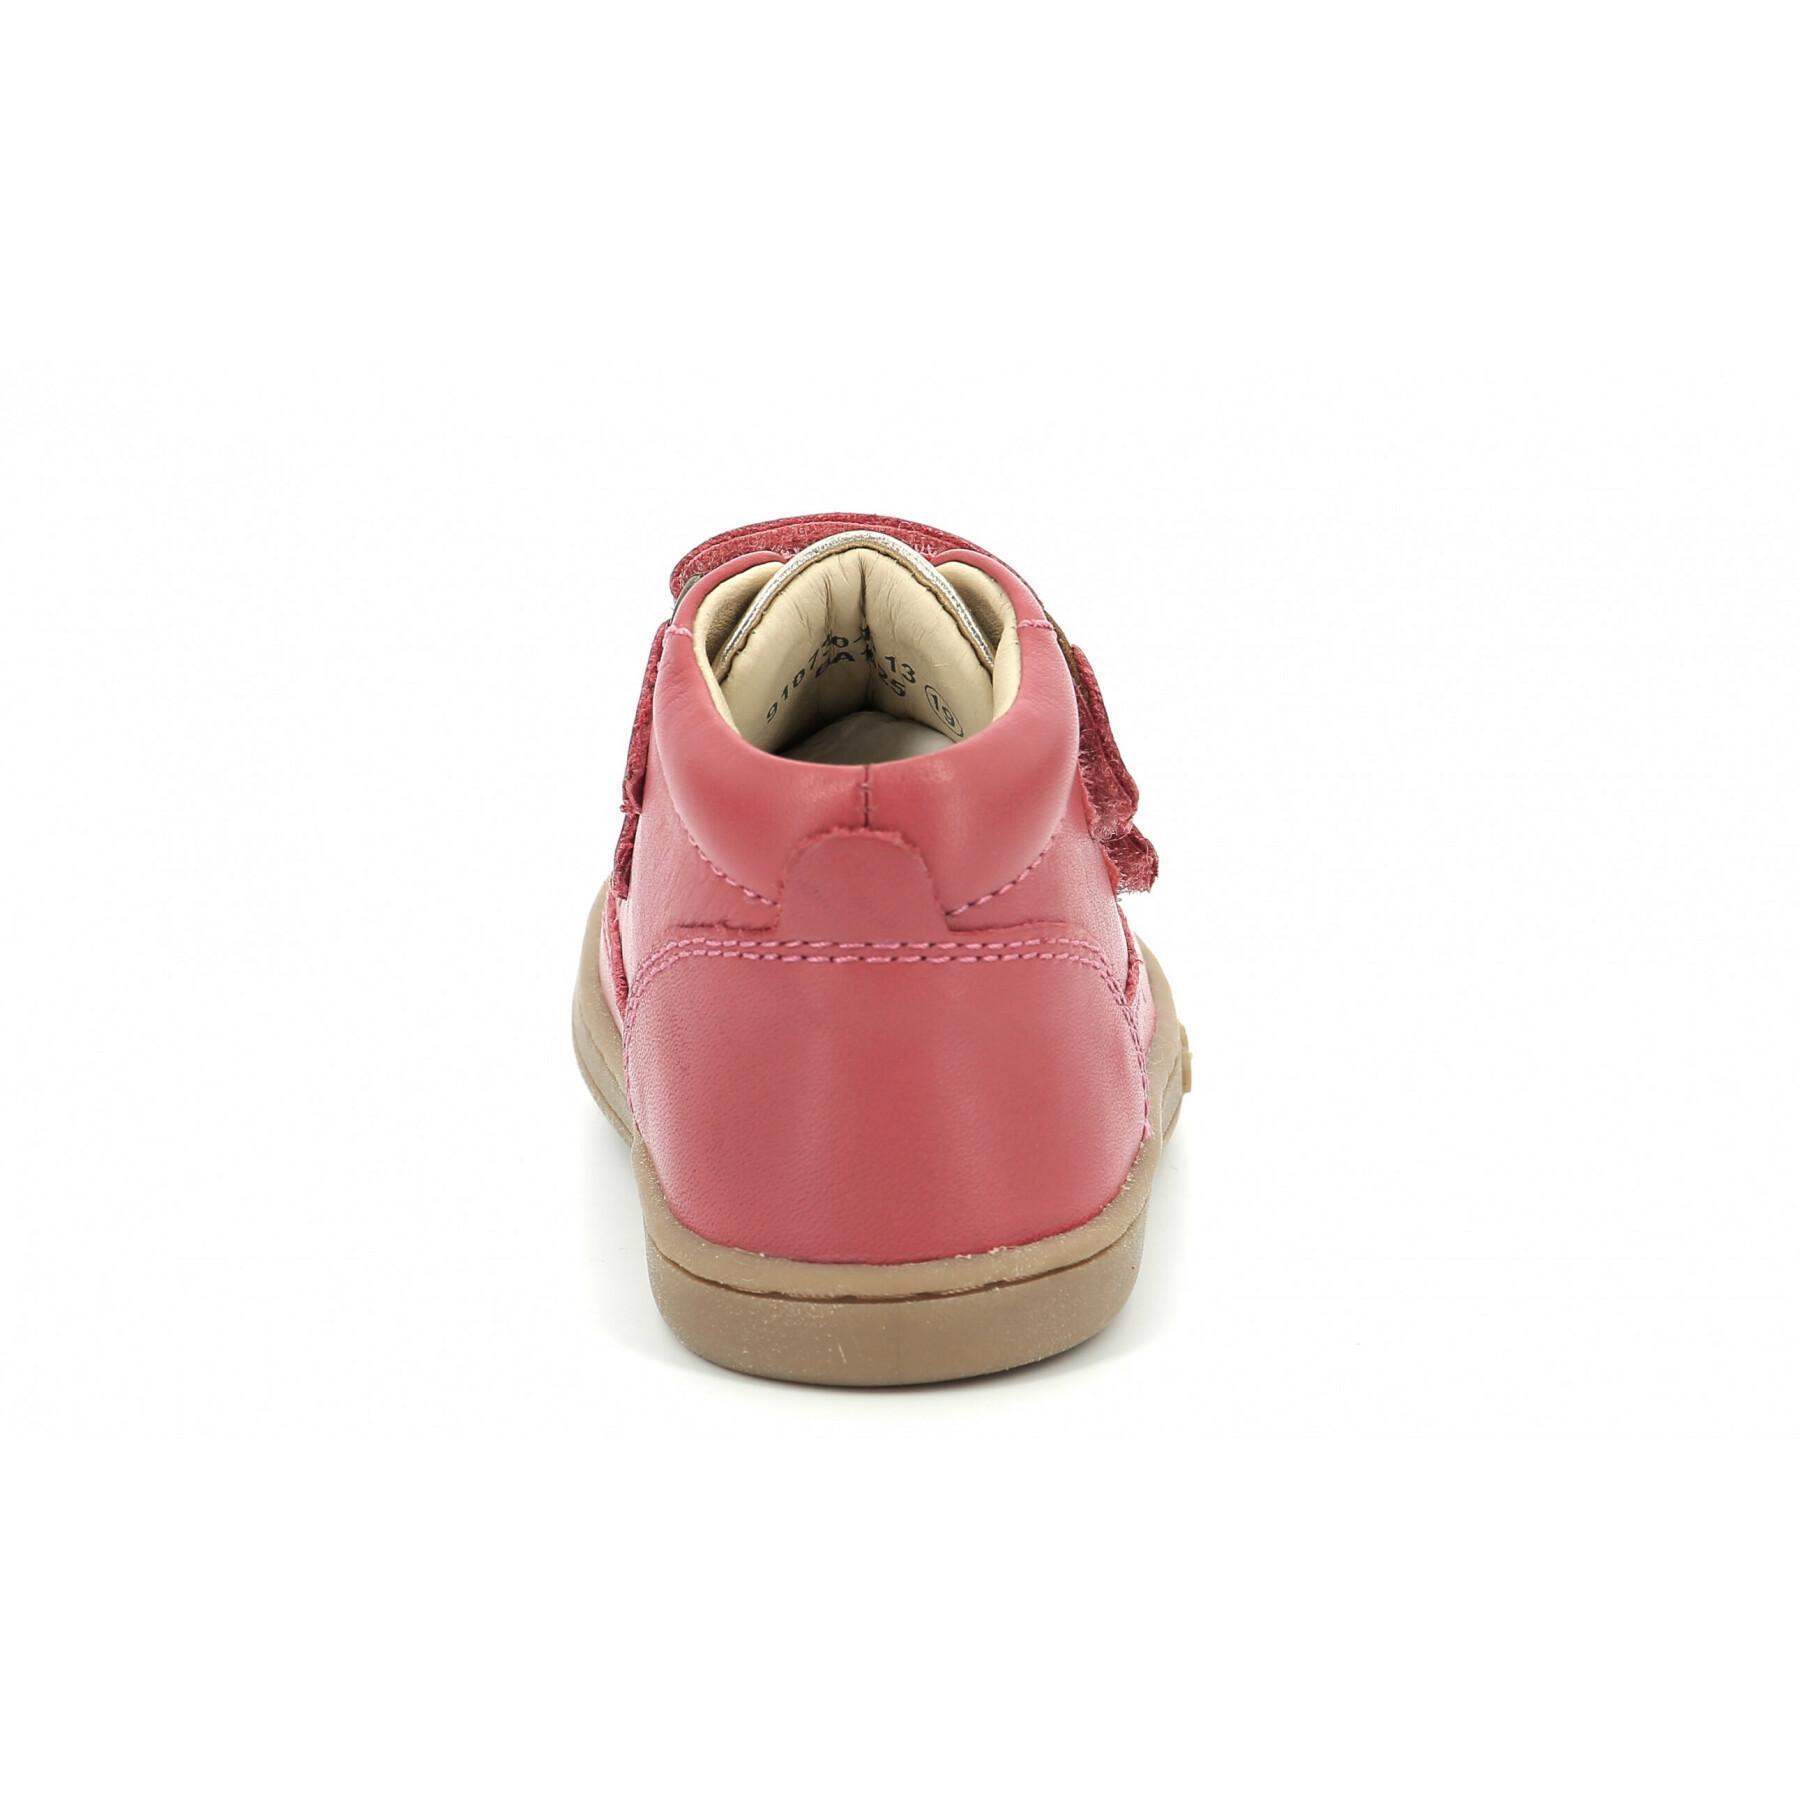 Baby girl sneakers Kickers Tractok